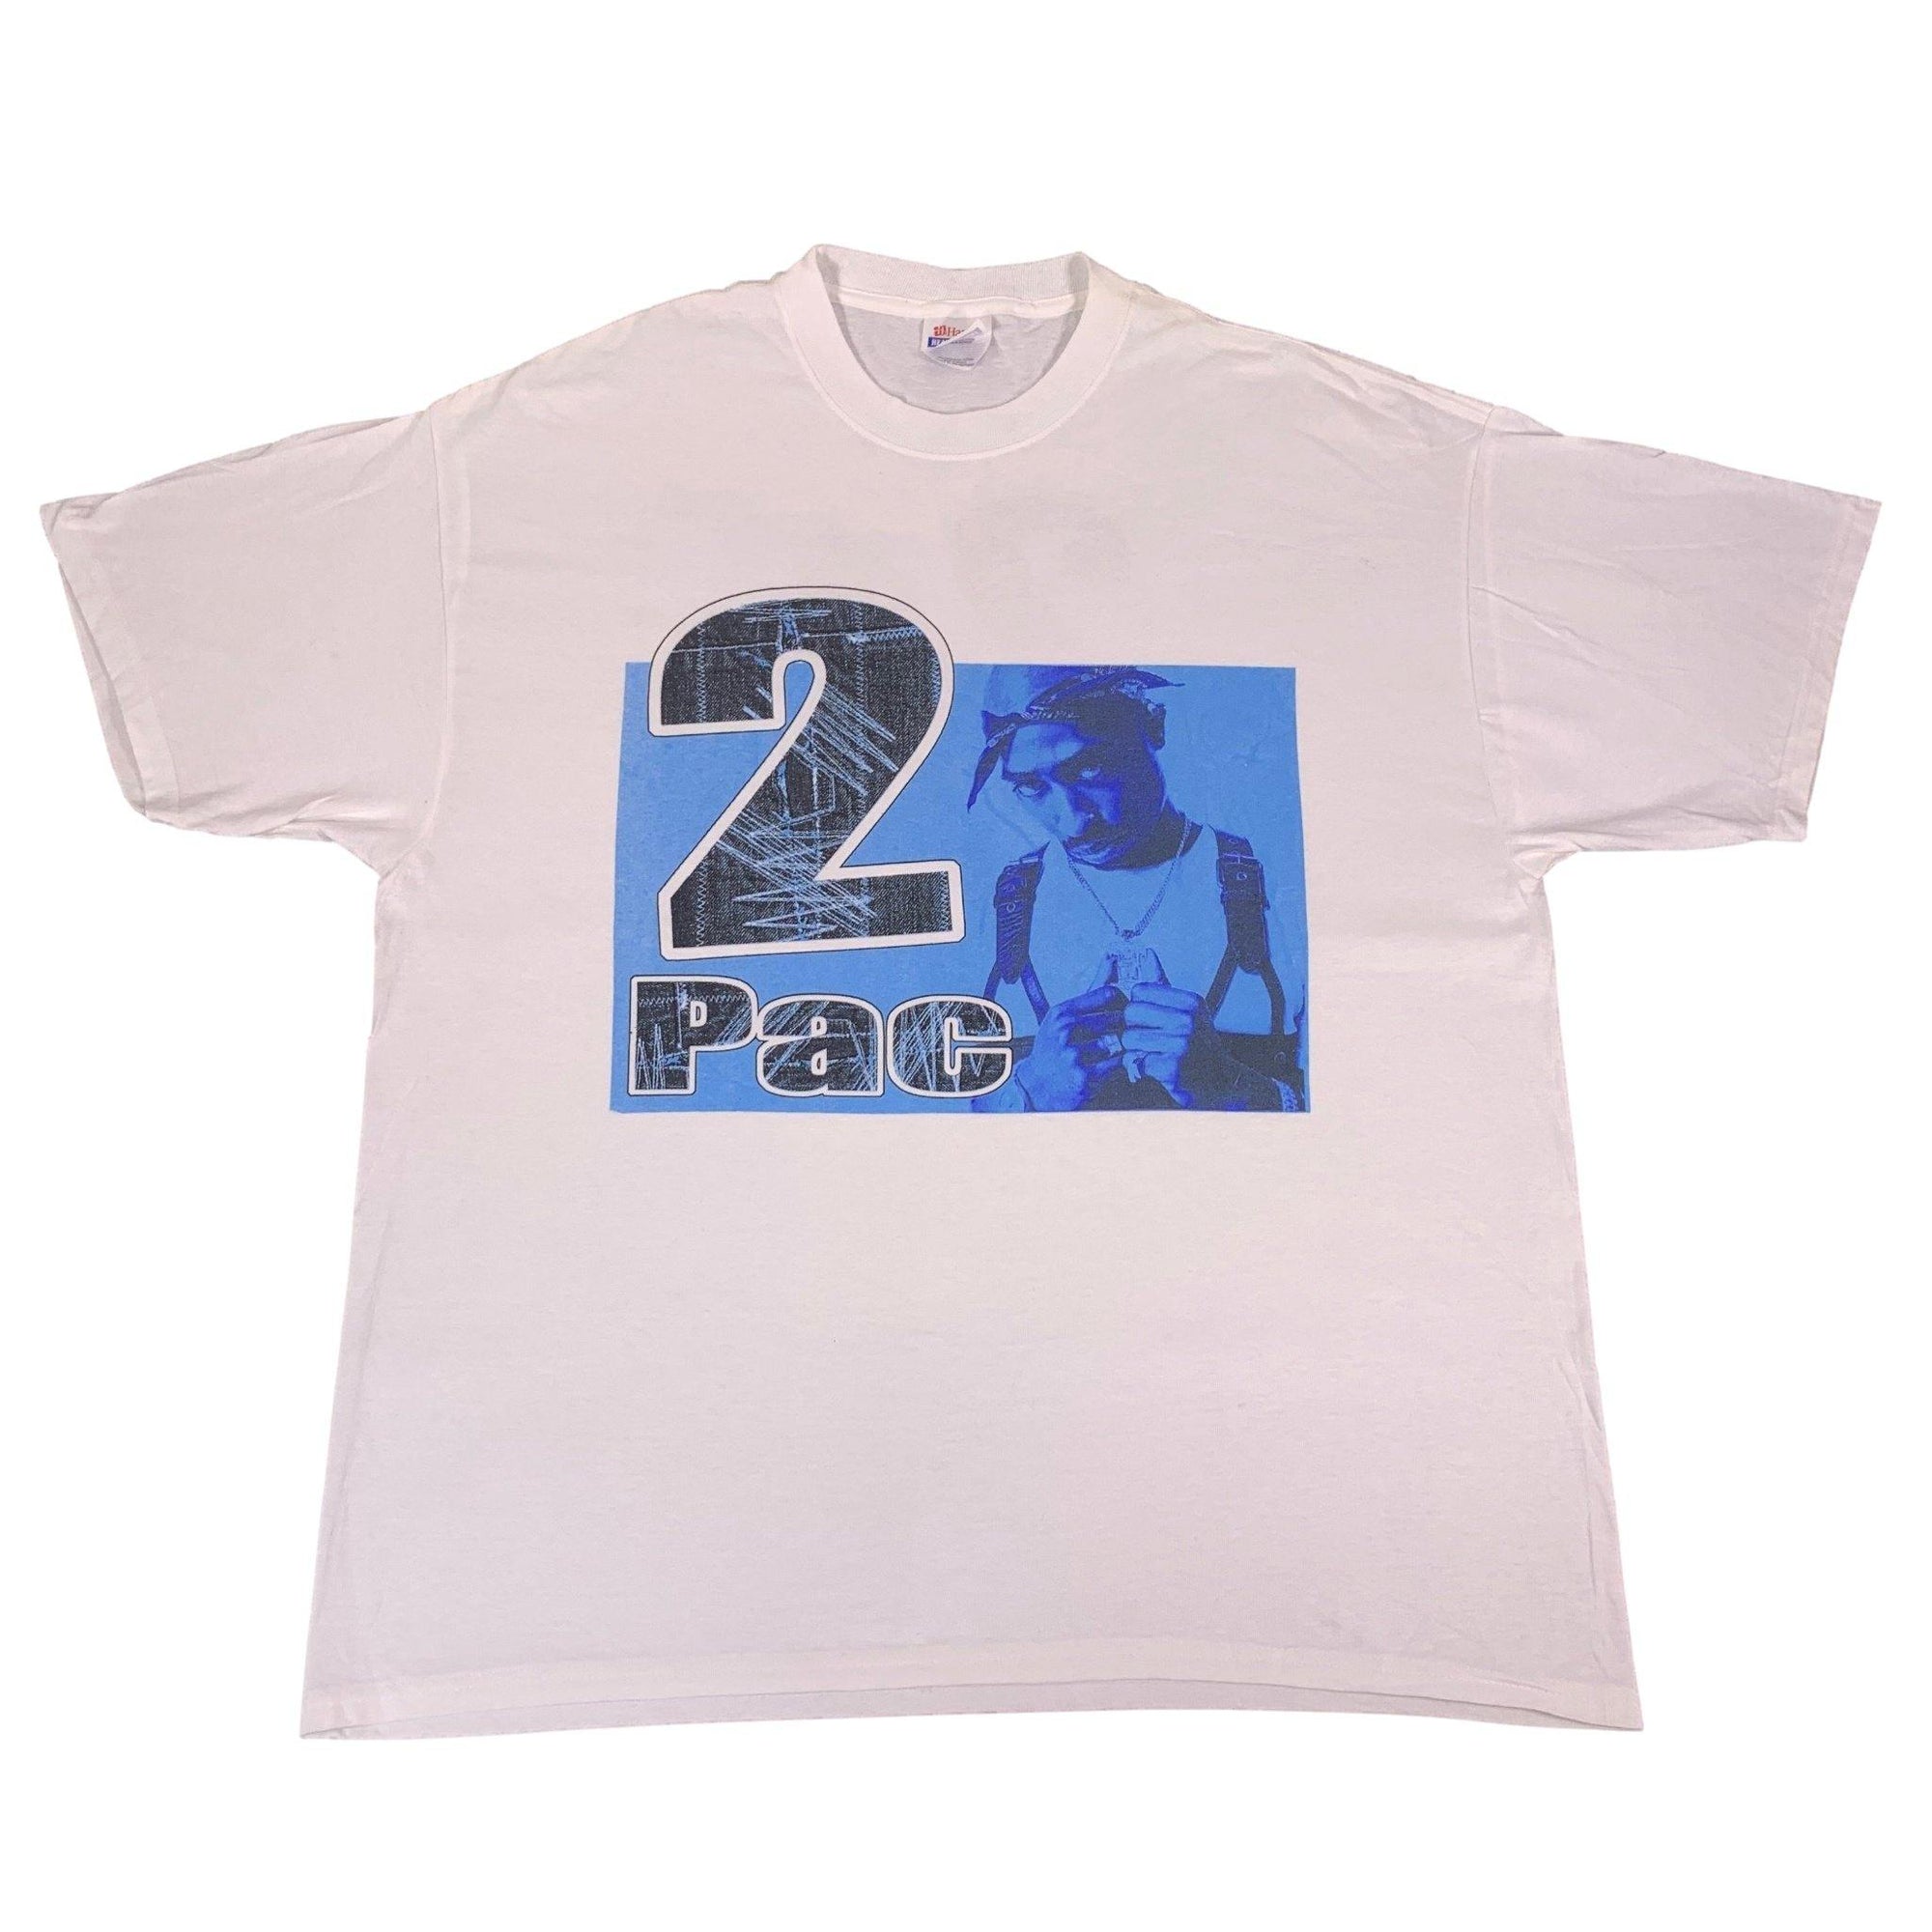 Vintage 2pac "Death Row" T-Shirt - jointcustodydc